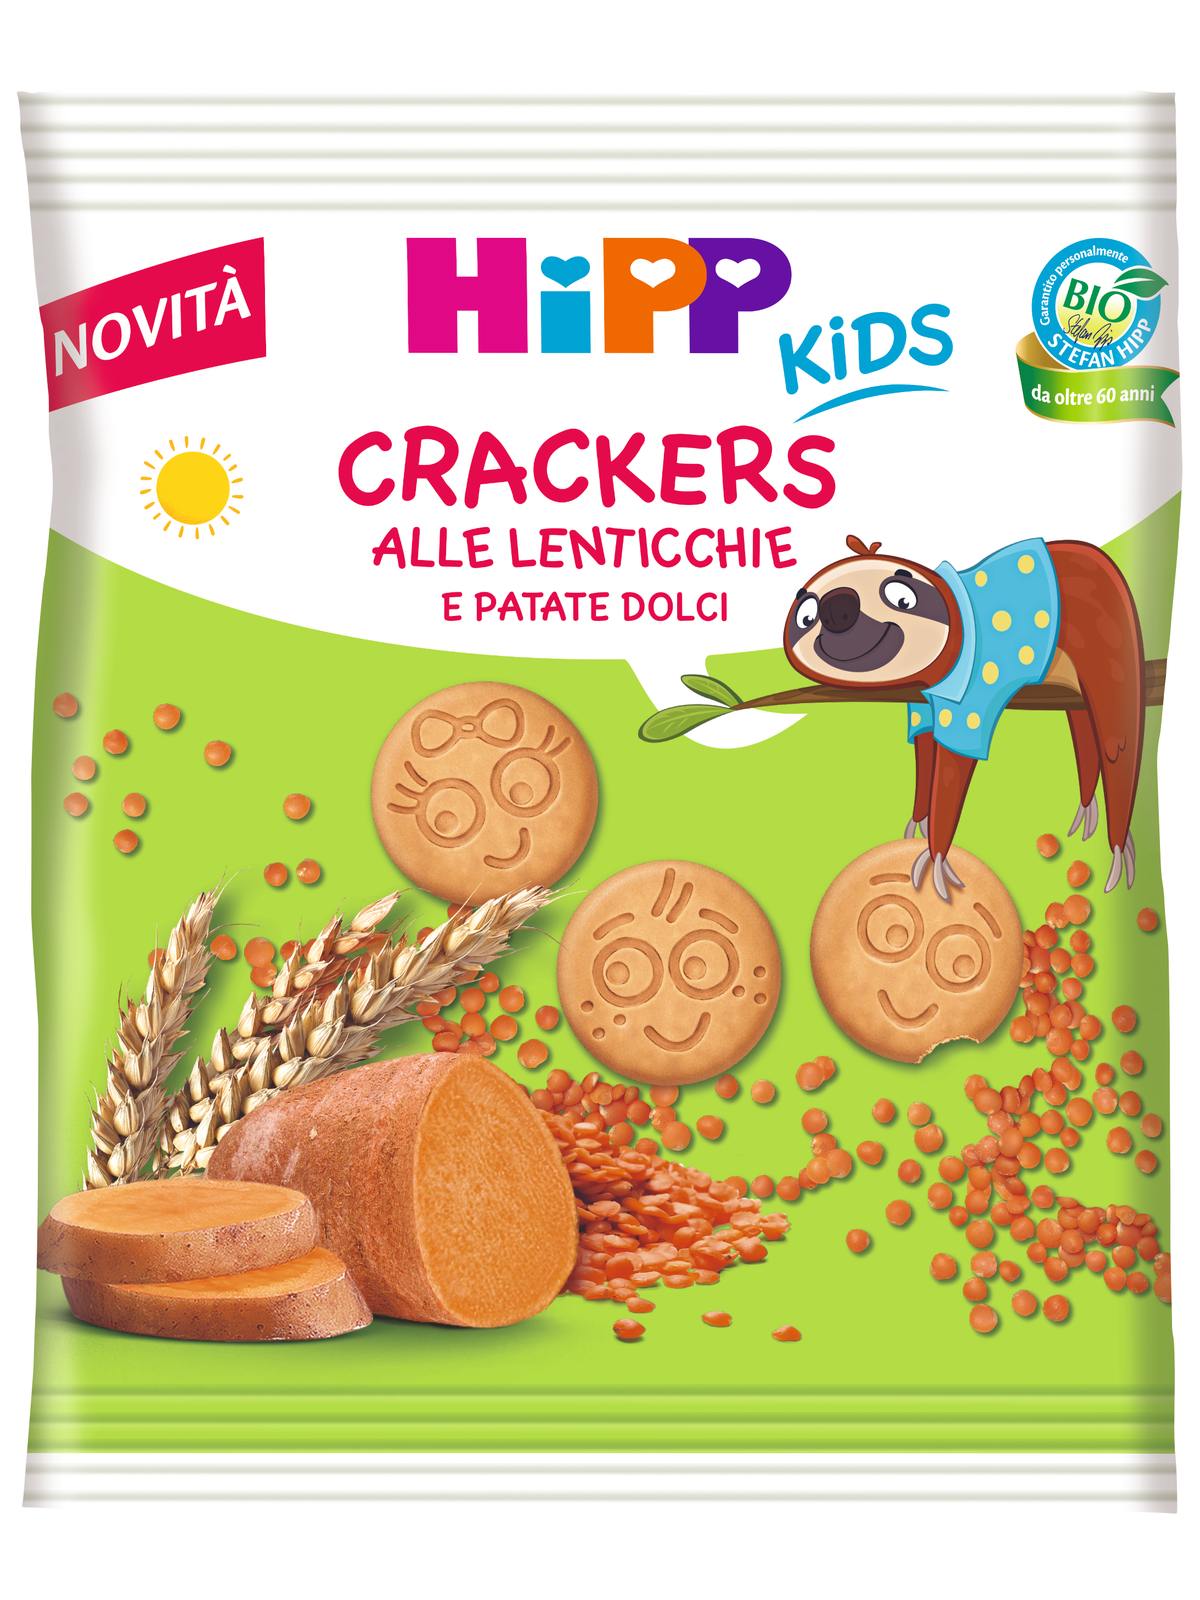 Hipp crackers alle lenticchie e patate dolci 80g - Hipp